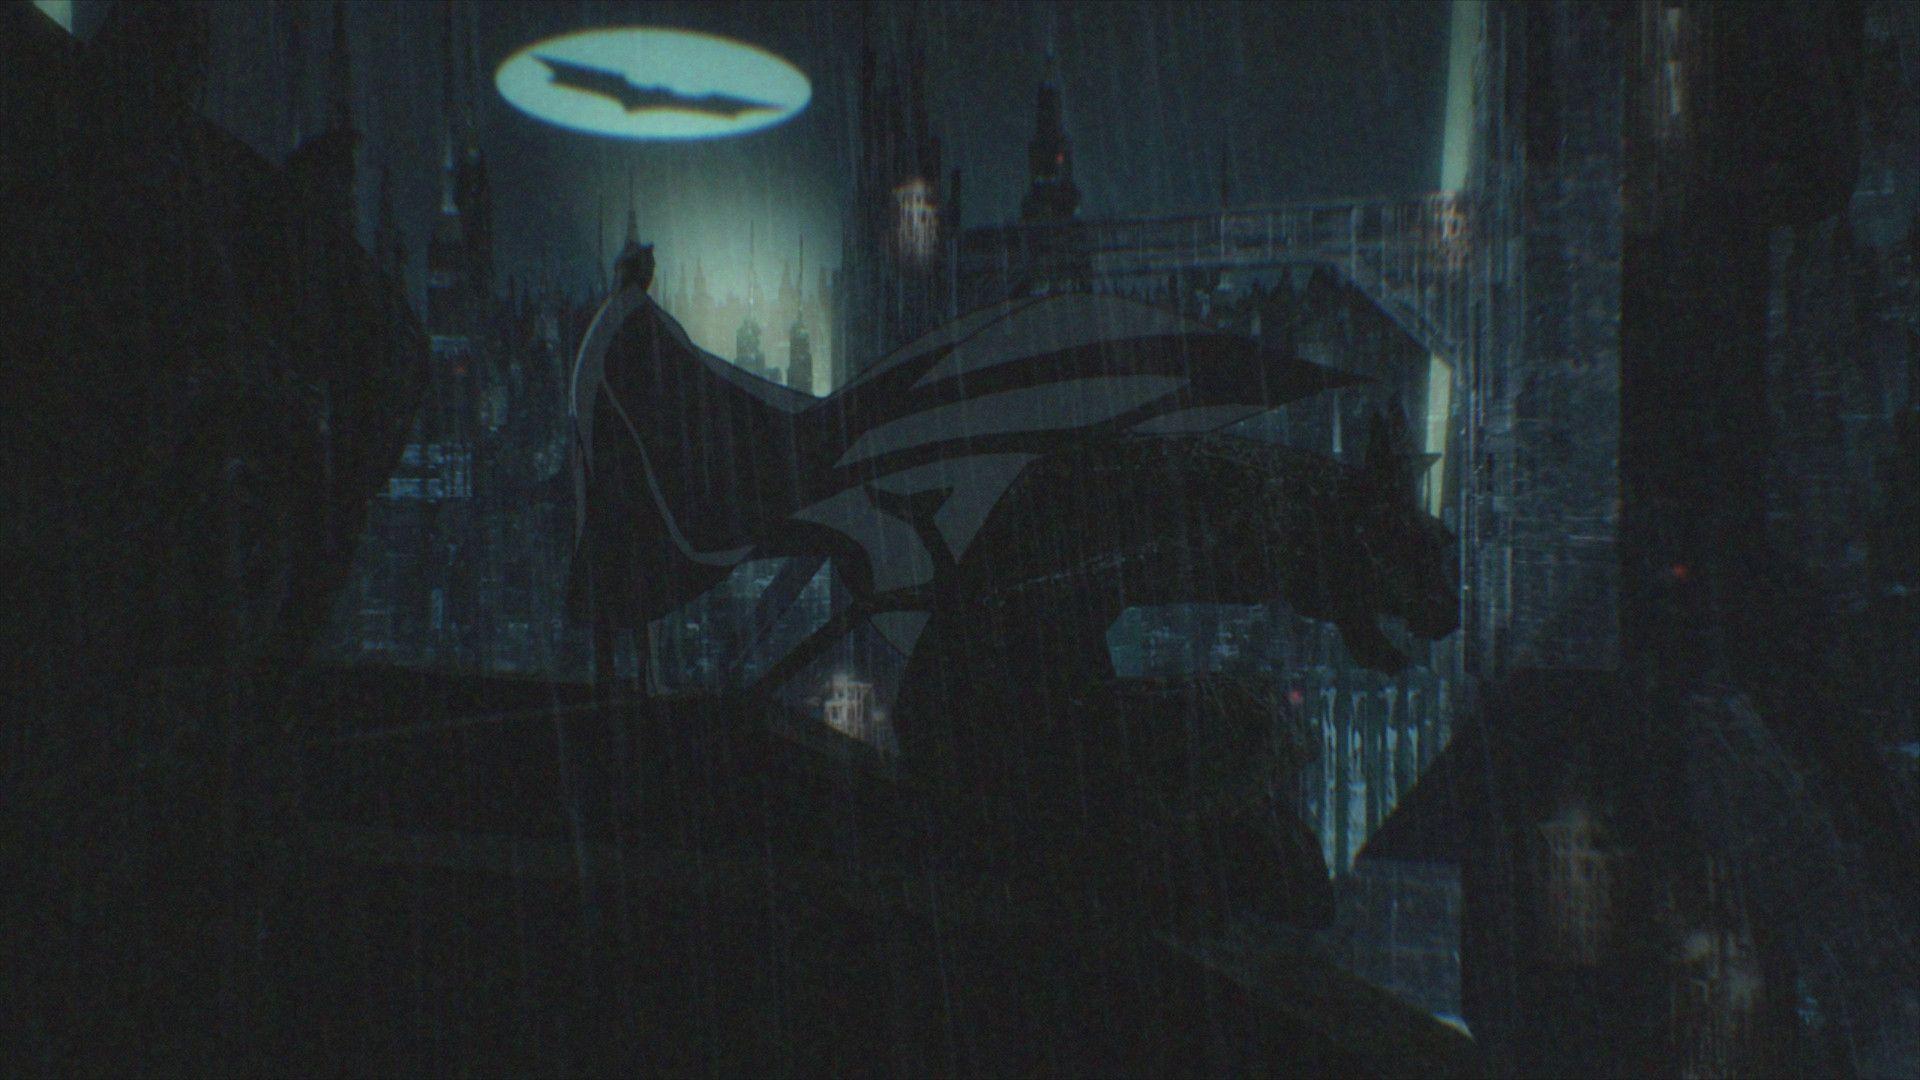 Gotham City Bat Signal Image & Picture